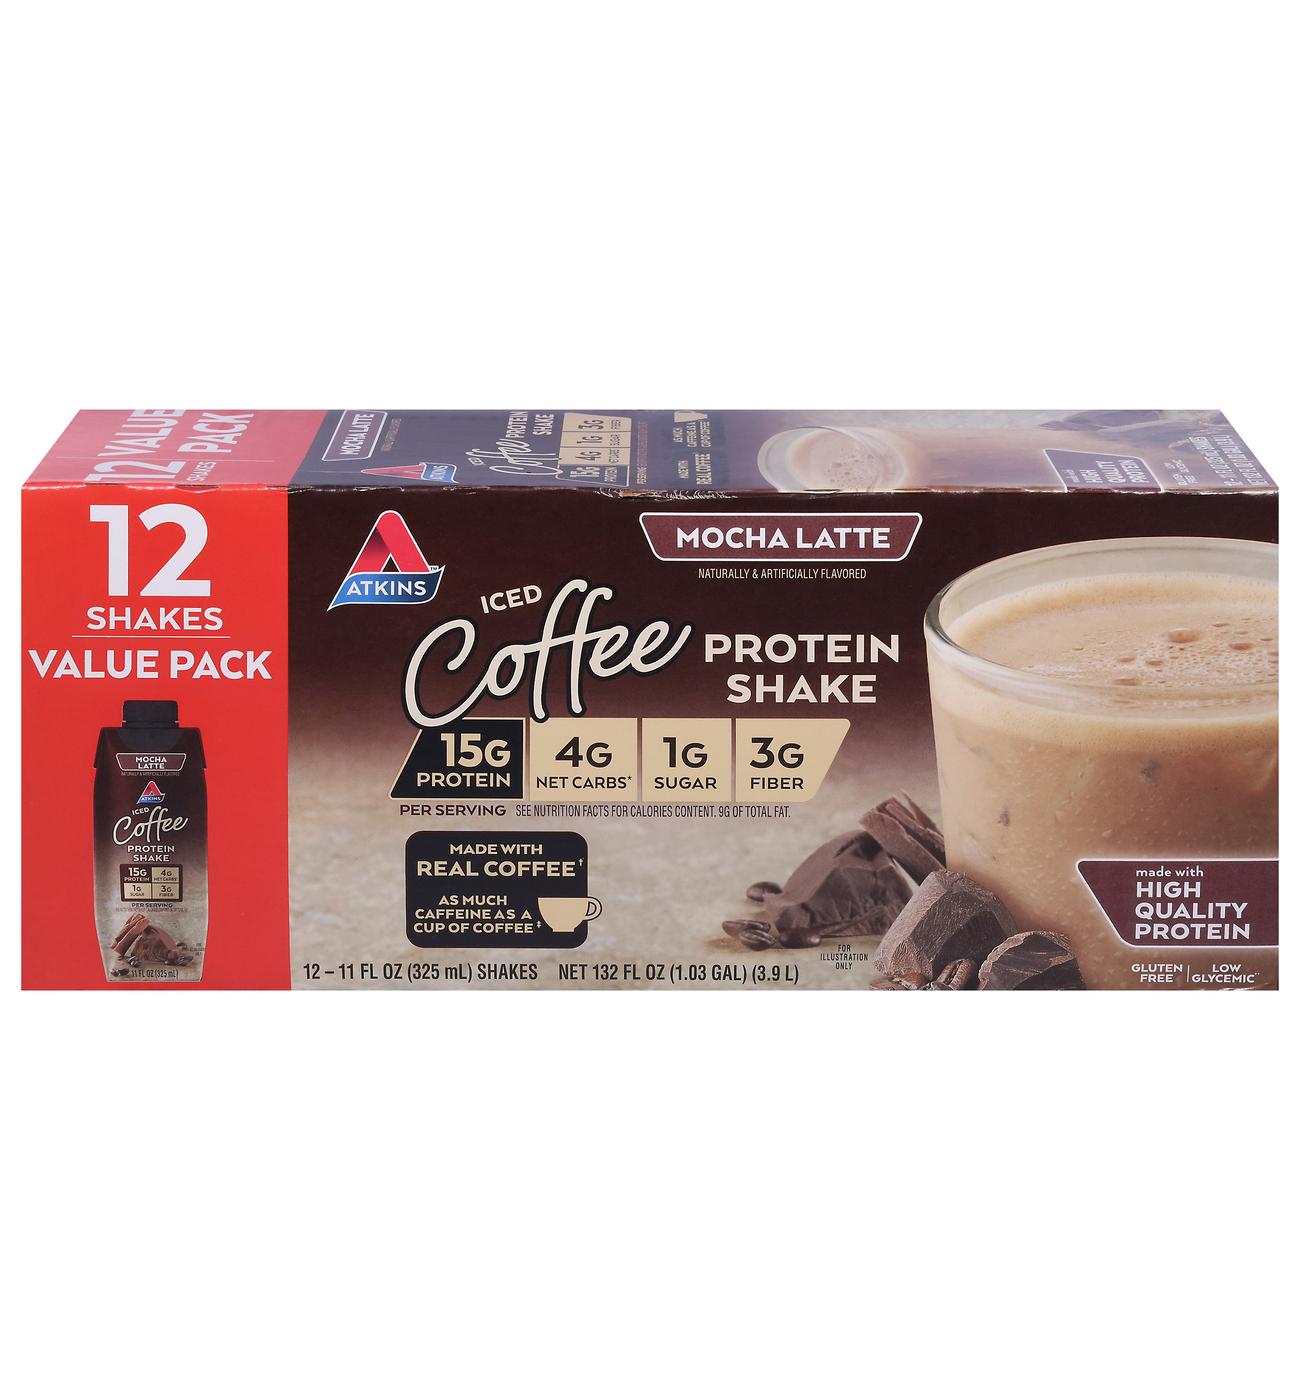 Atkins Iced Coffee 15G Protein Shake 12 pk - Mocha Latte; image 1 of 2